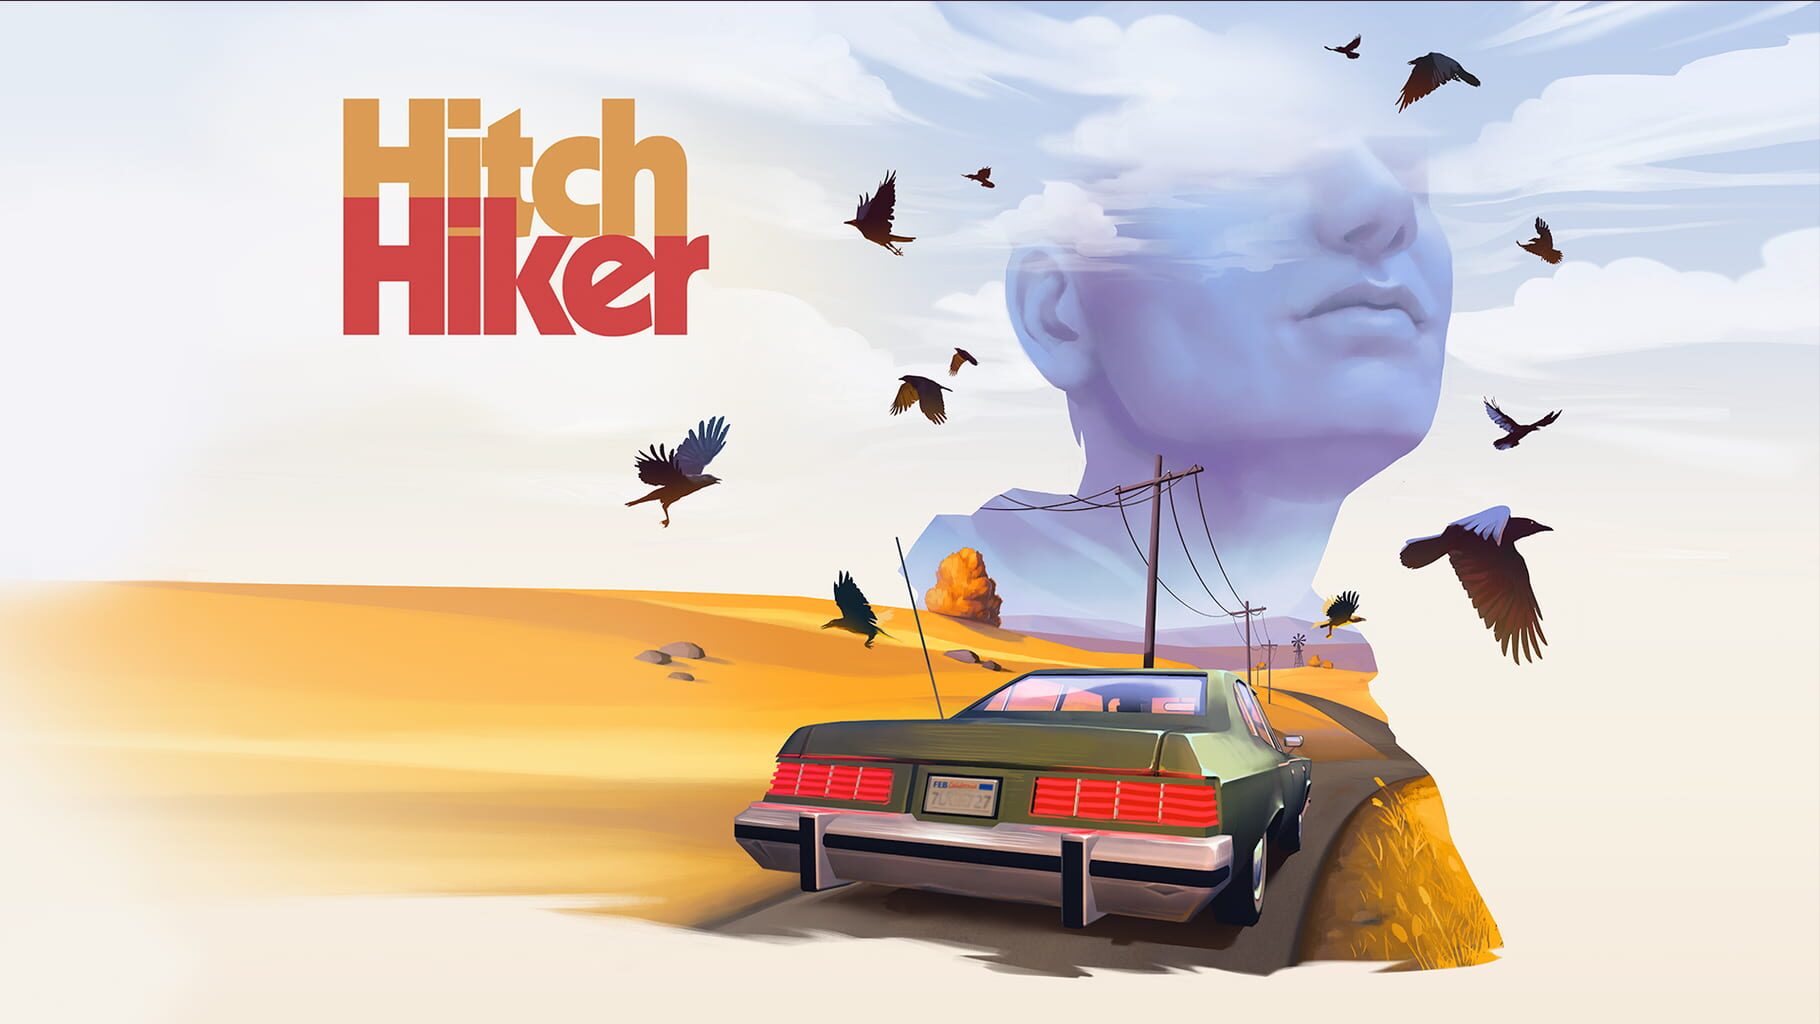 Hitchhiker artwork